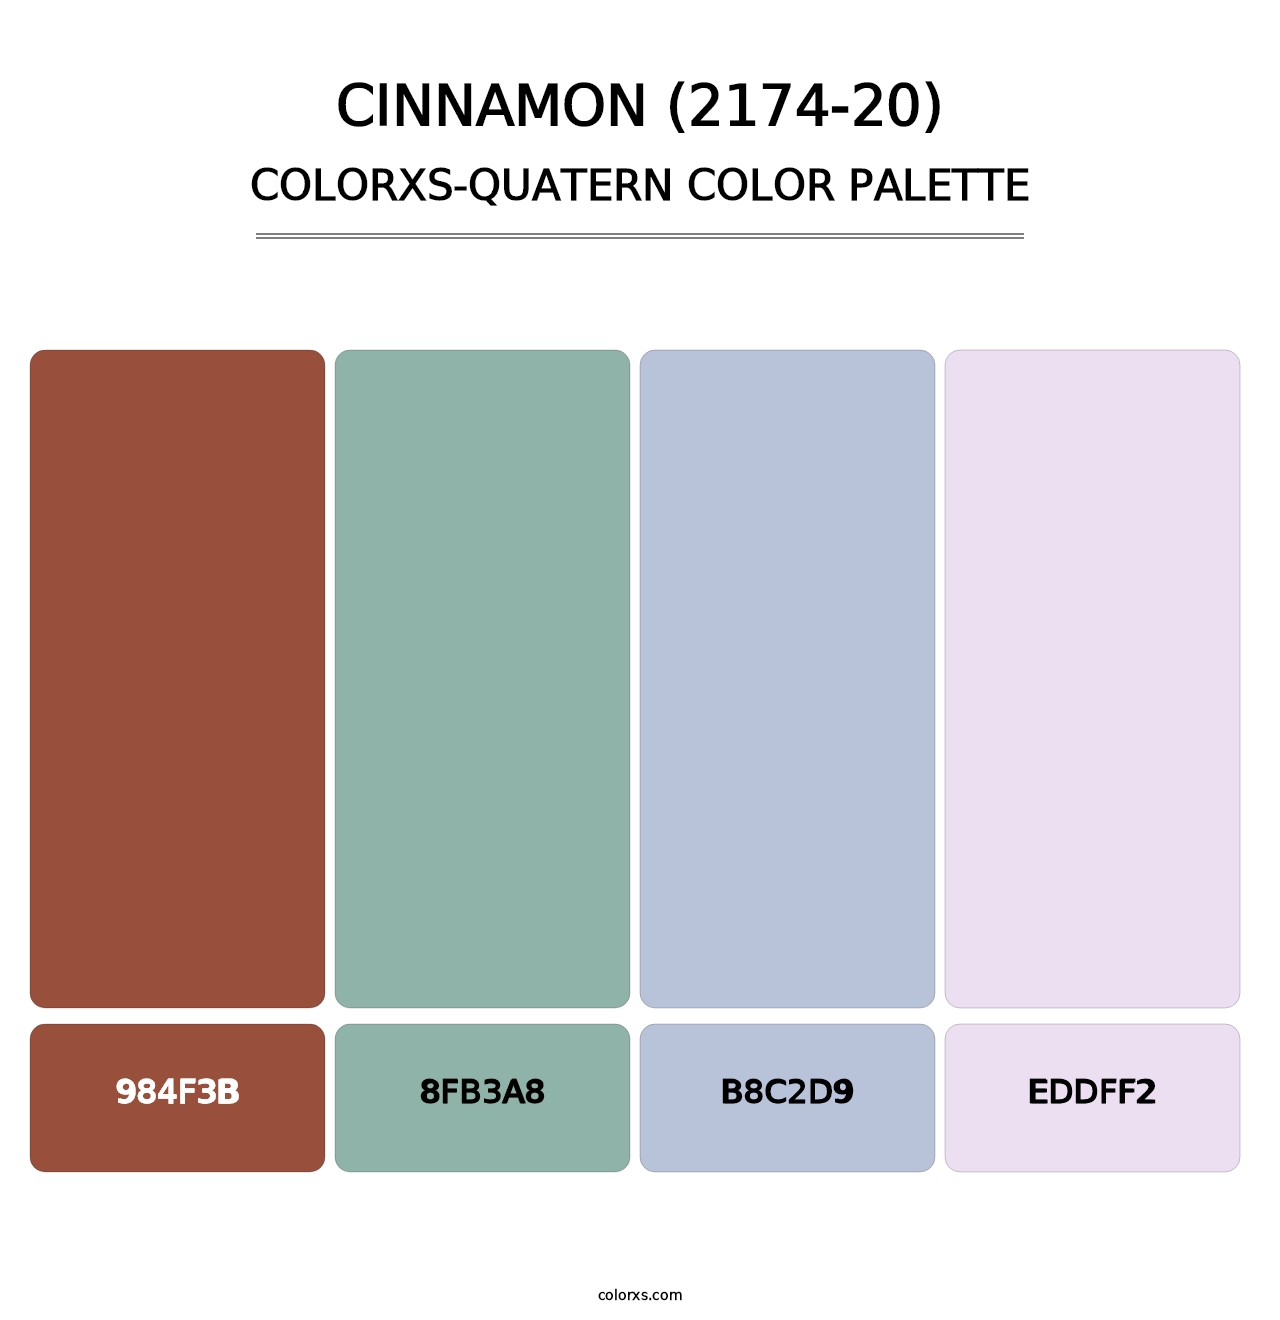 Cinnamon (2174-20) - Colorxs Quatern Palette